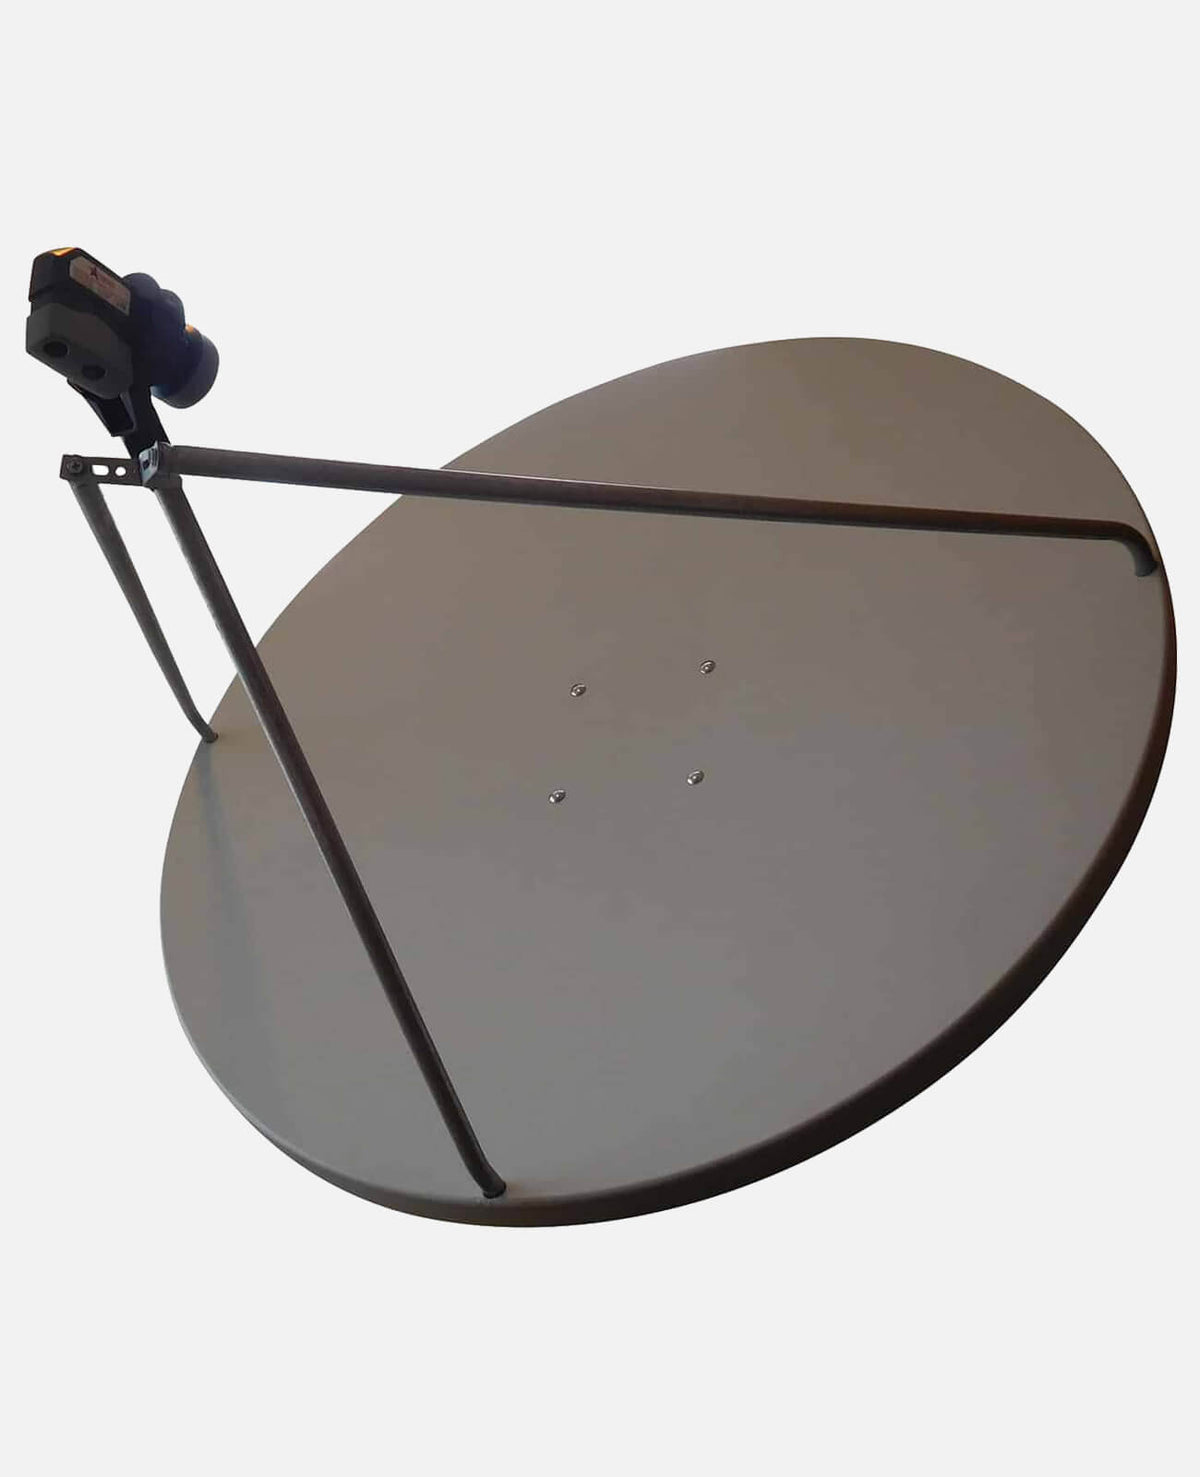 Skyware Global 1.2 Meter Dish, 120 cm Offset Satellite Dish Antenna, Receive Only, (Type 120)